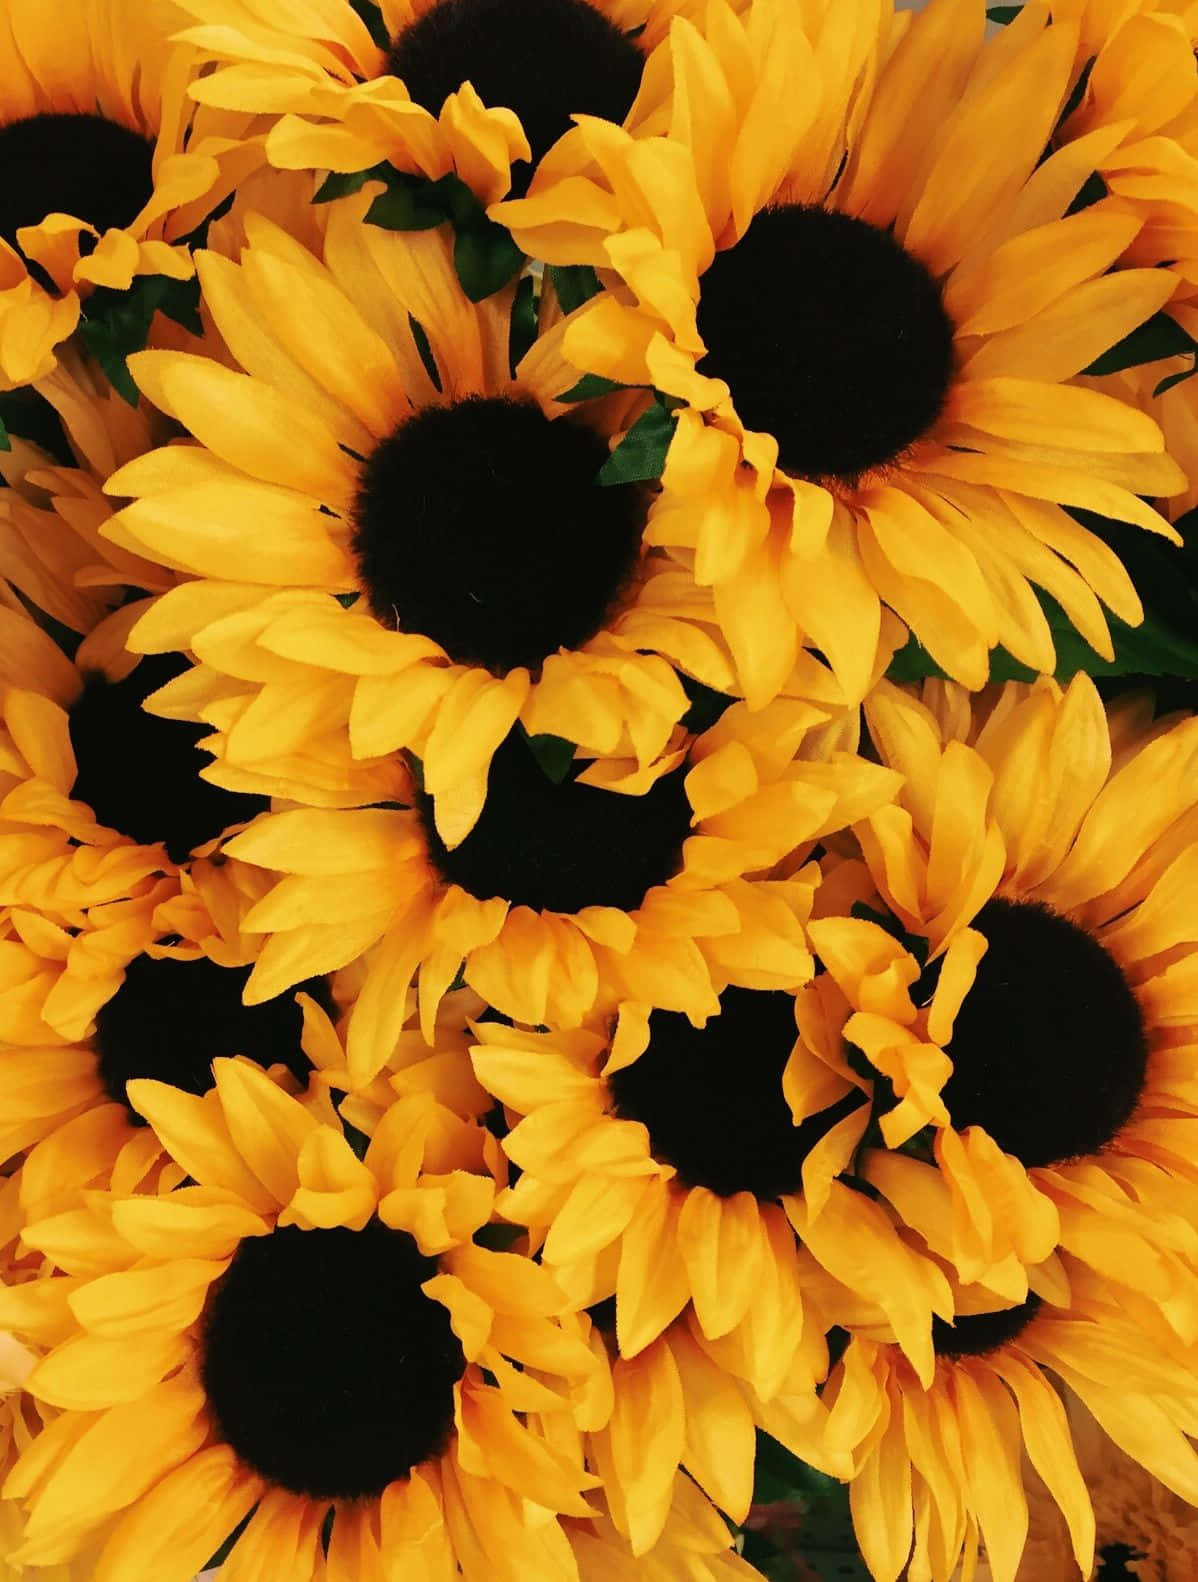 A bouquet of yellow sunflowers. - Sunflower